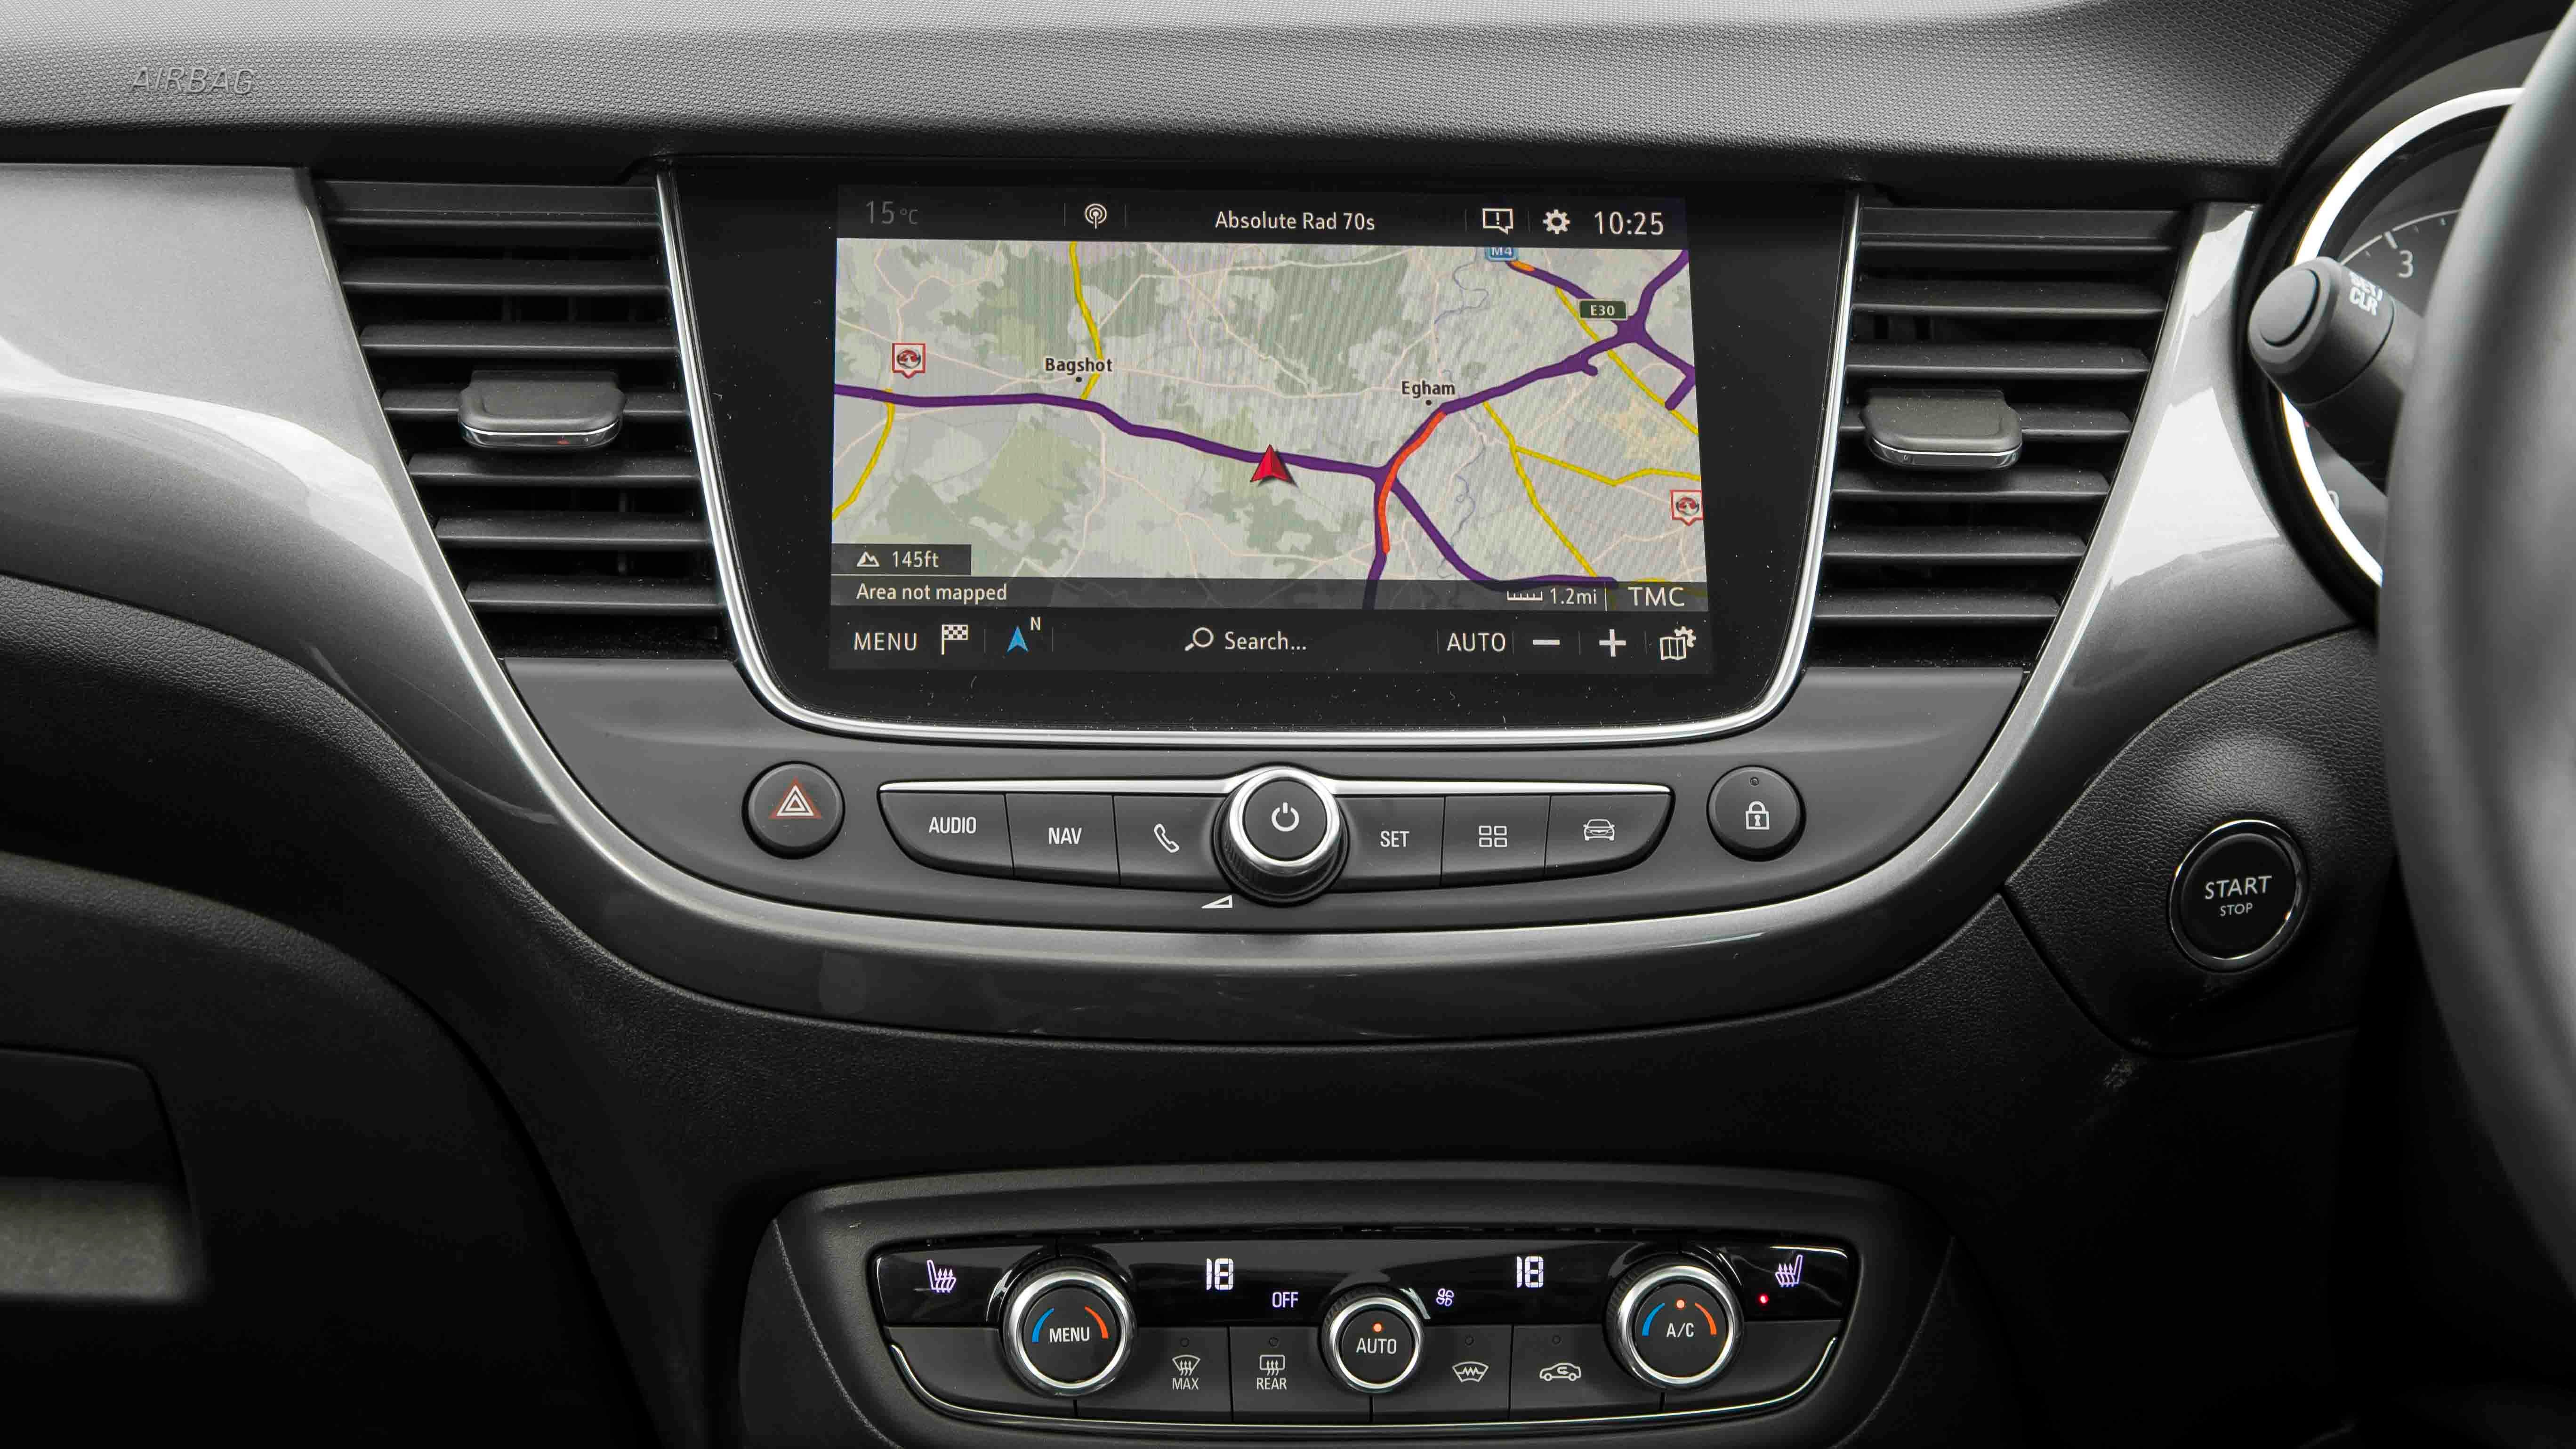 Vauxhall Crossland X touchscreen